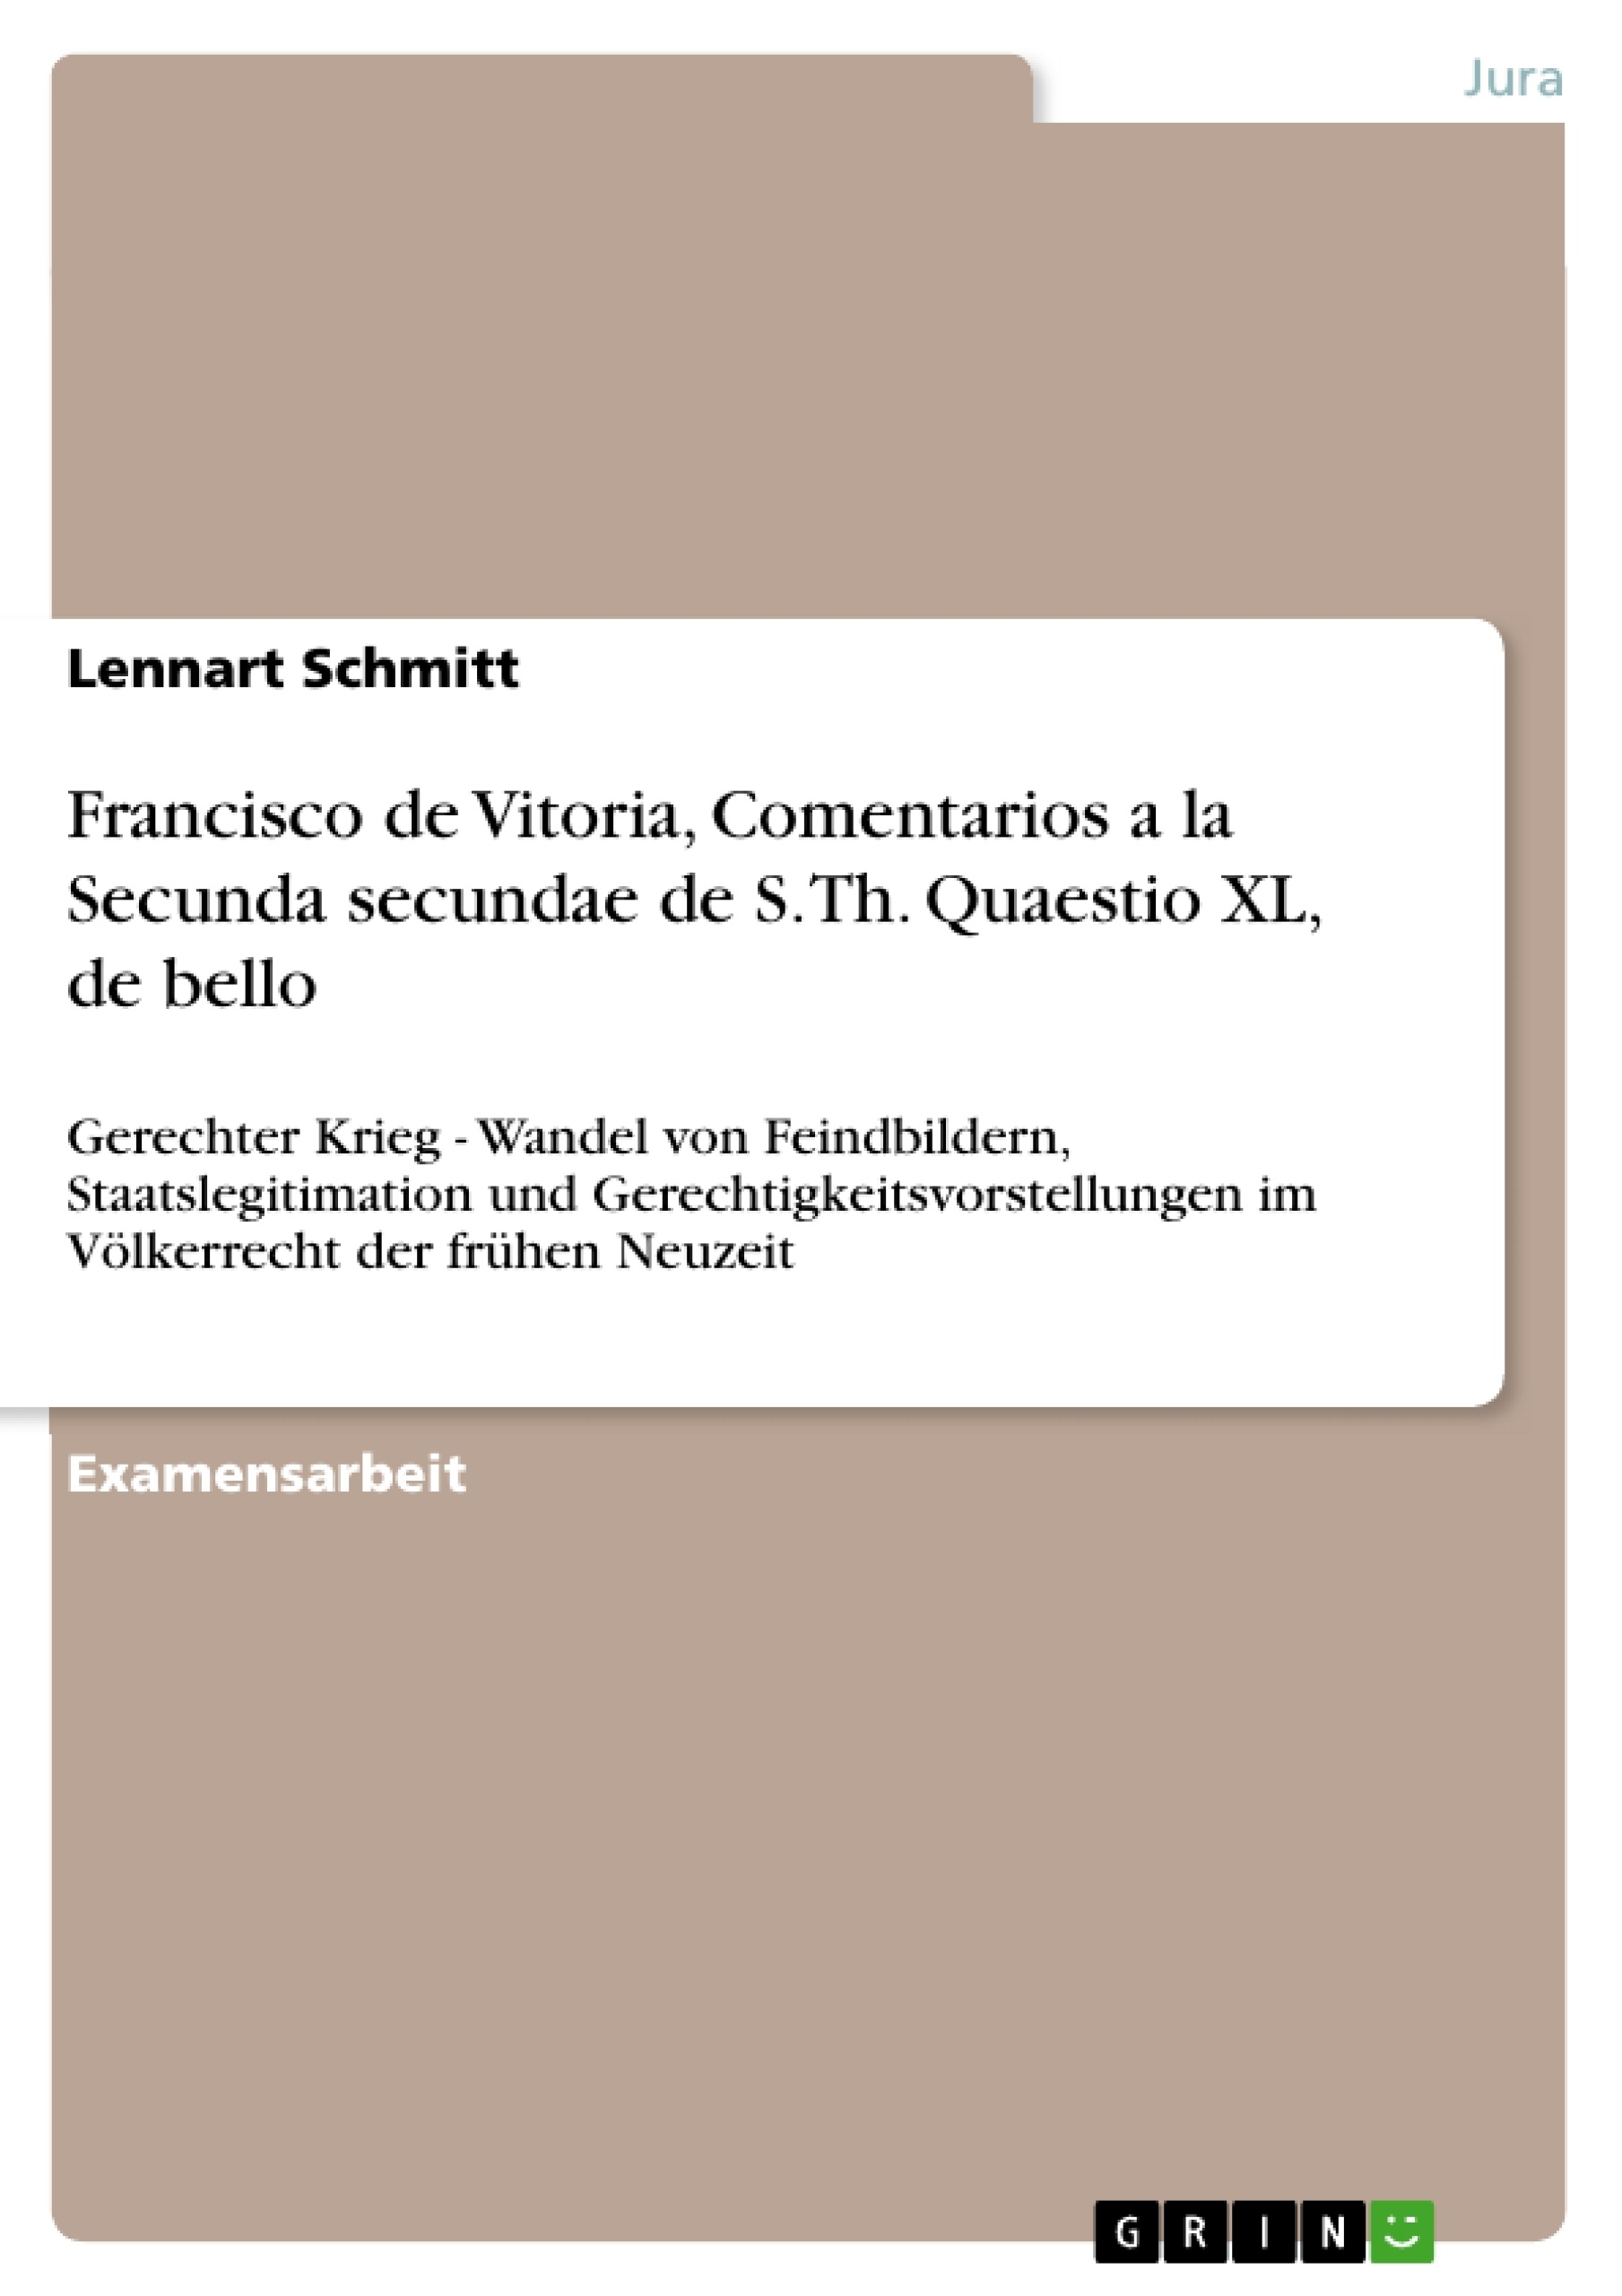 Titel: Francisco de Vitoria, Comentarios a la Secunda secundae de S. Th. Quaestio XL, de bello